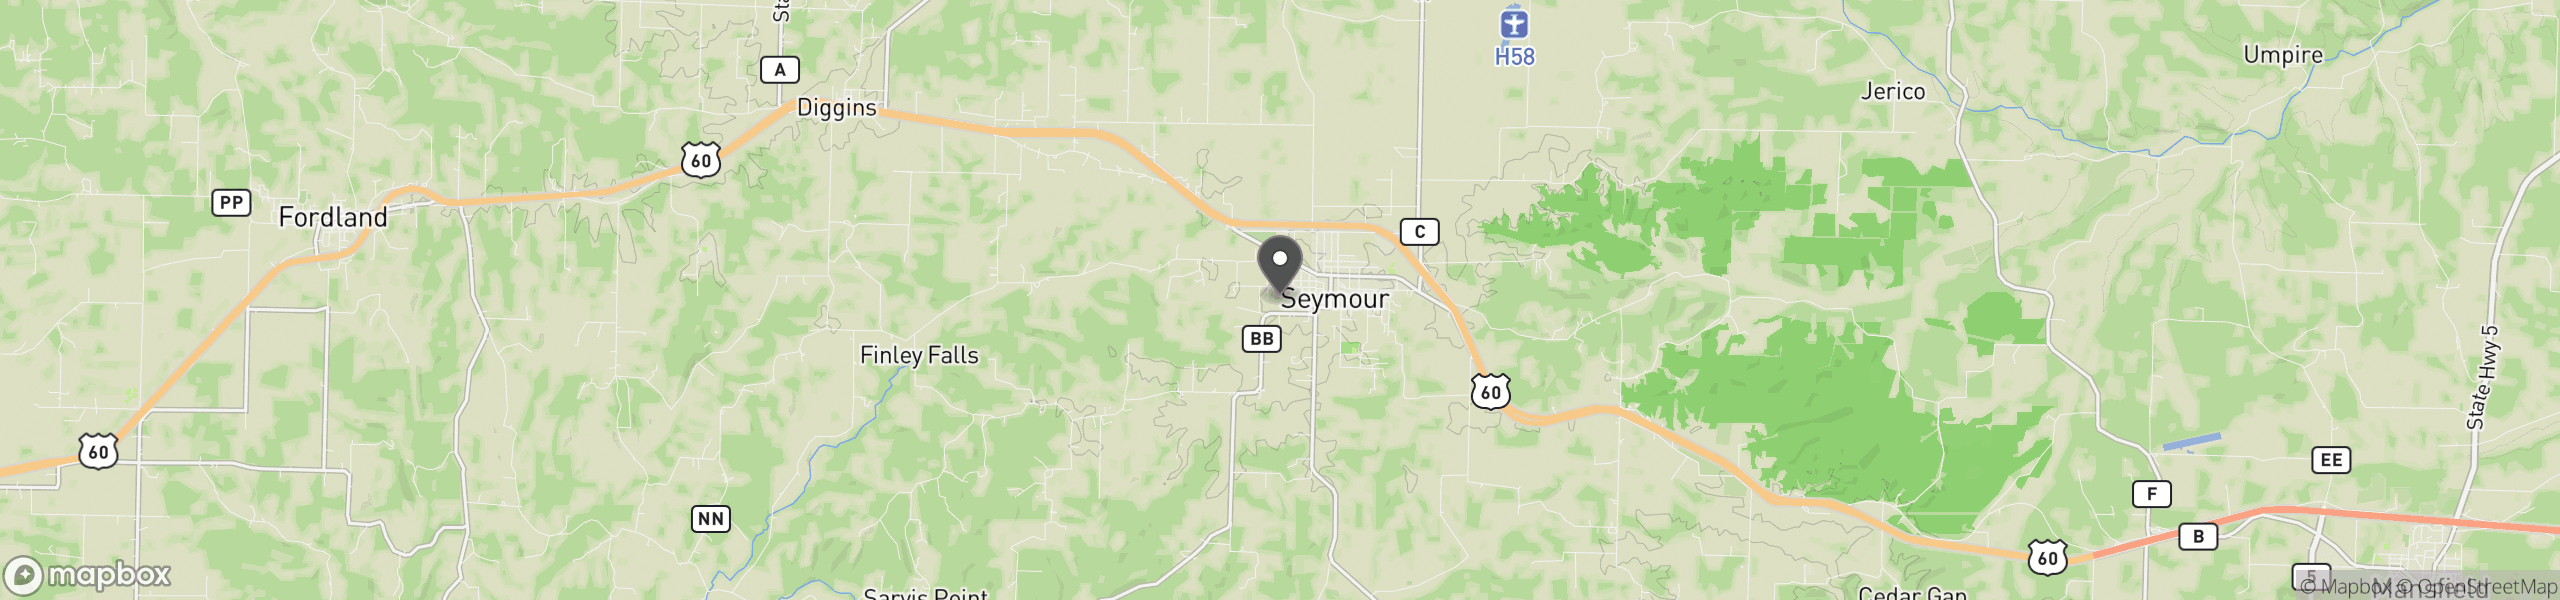 Seymour, MO 65746